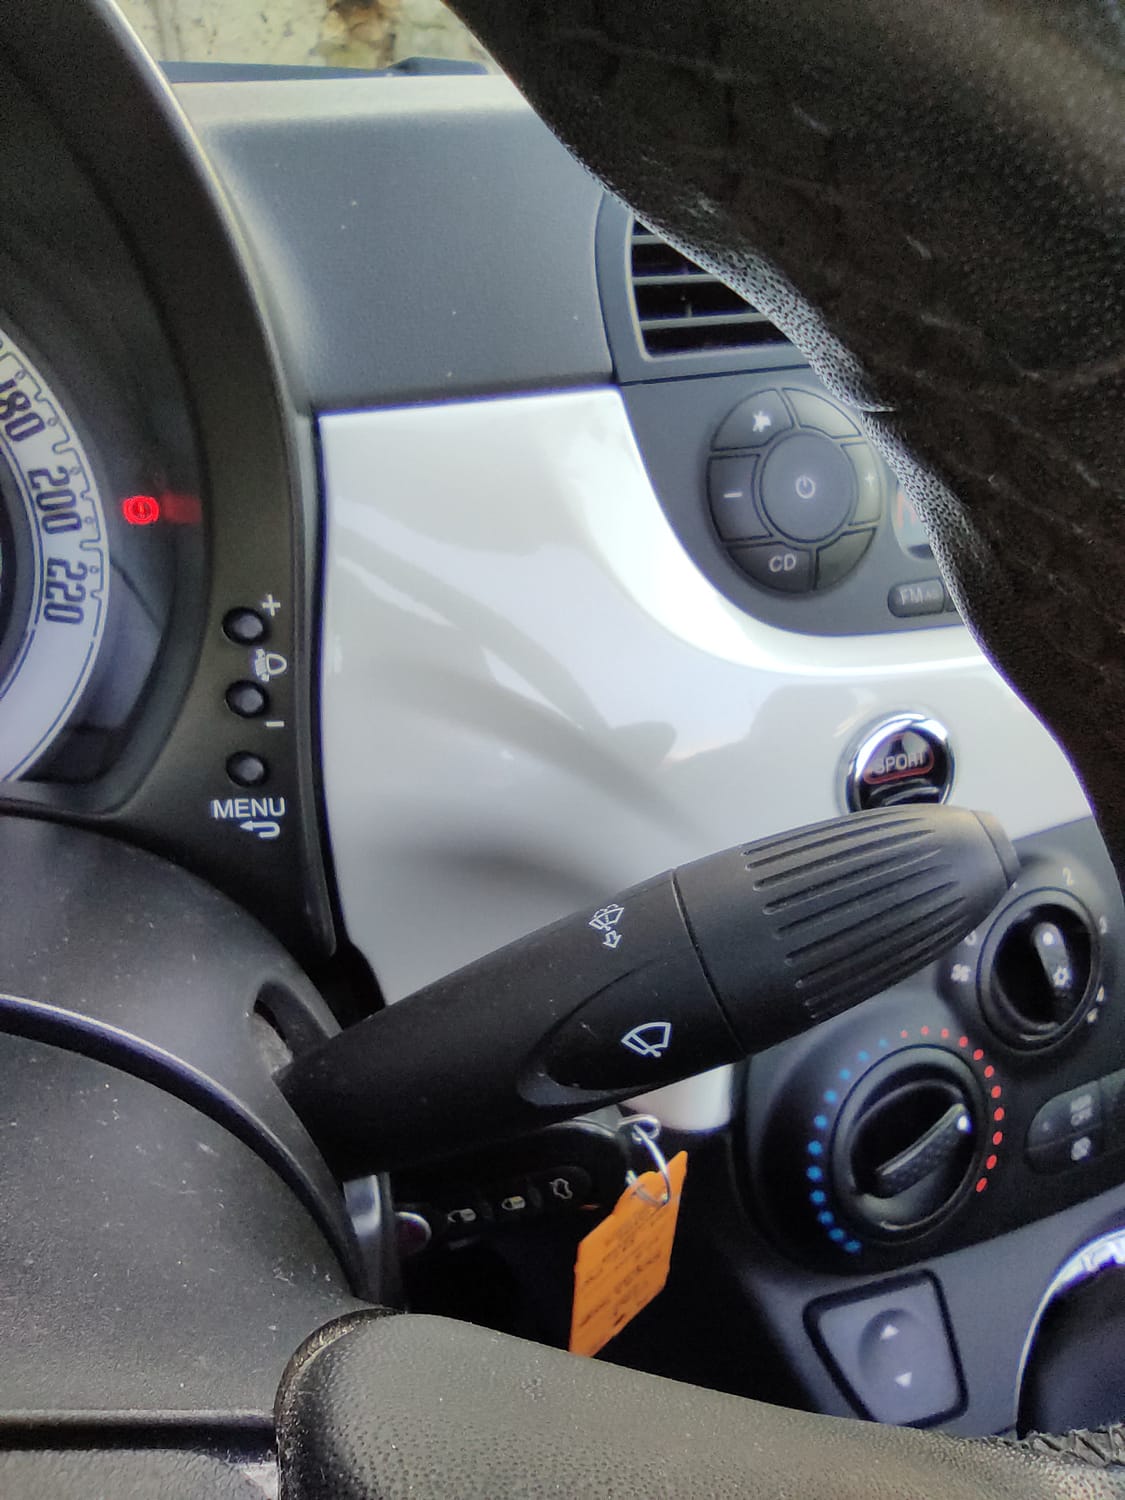 FIAT 500 II C 2014 0.9 8V 105 TWINAIR Start&Stop LOUNGE - Automatix Motors - Voiture Occasion - Achat - Vente - Reprise